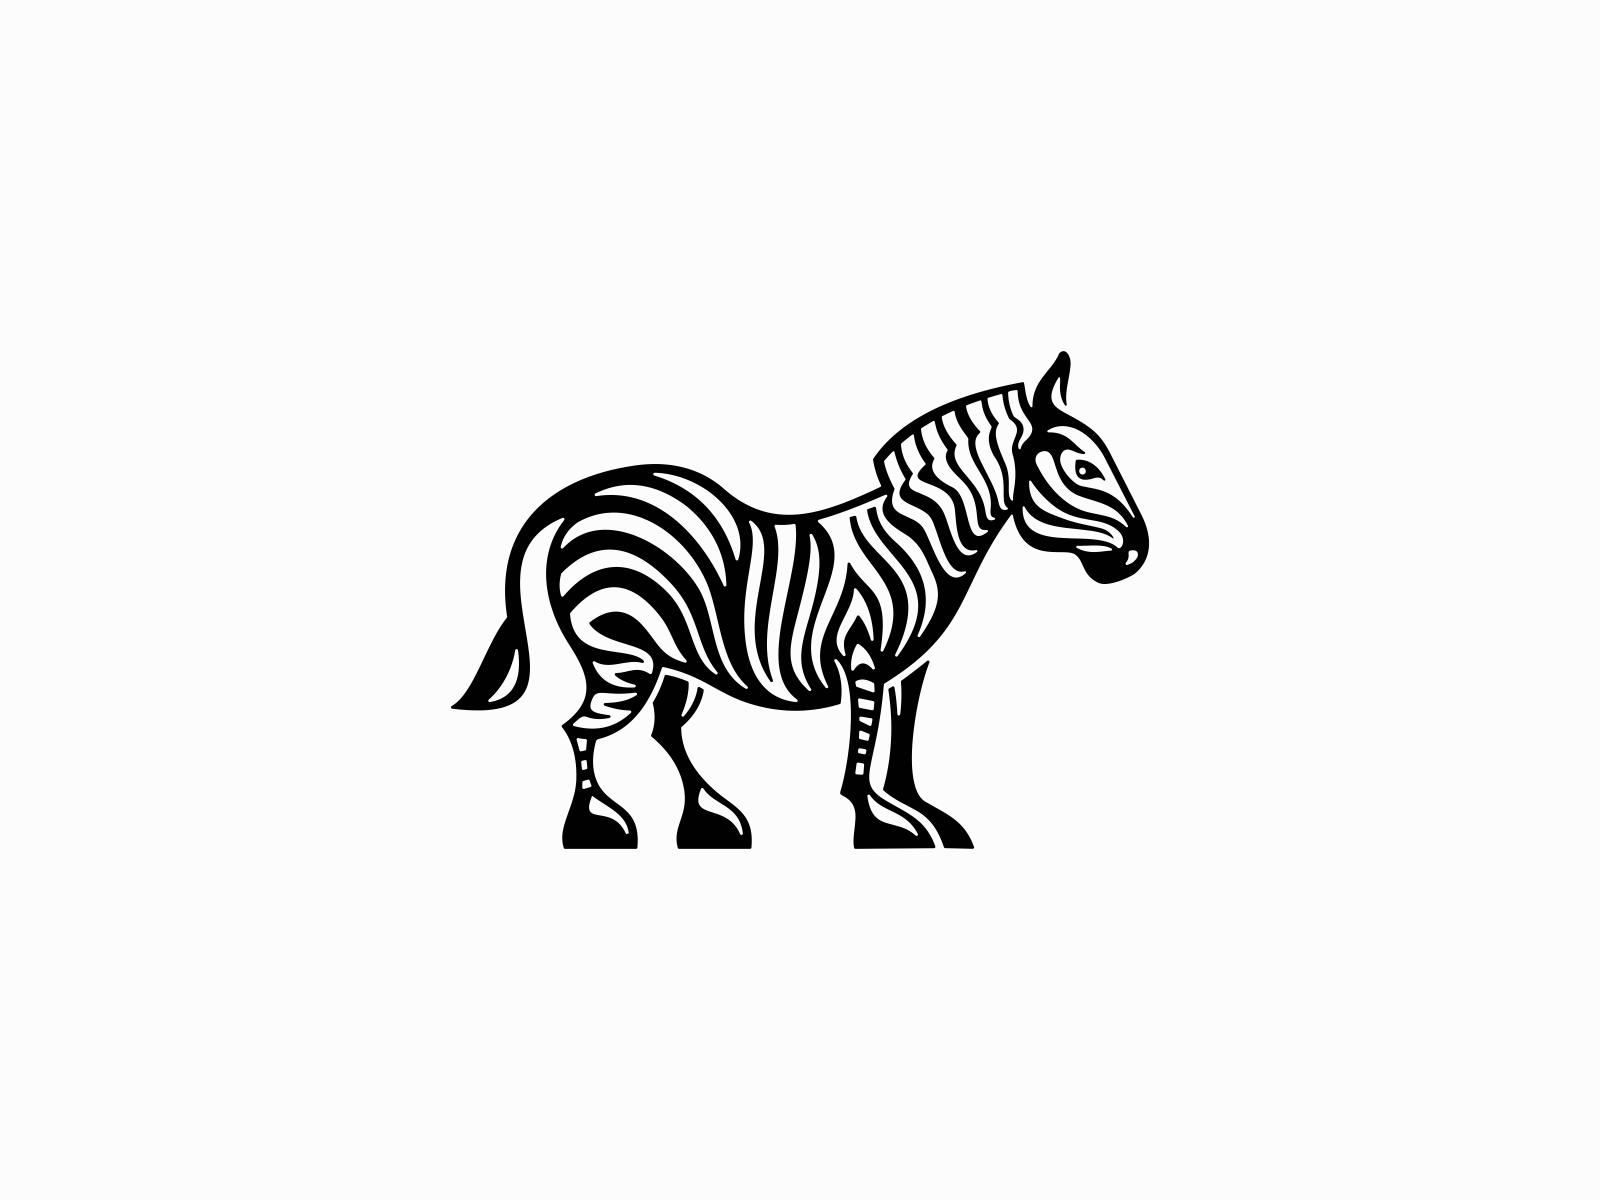 DIY How To Draw Zebra Easy For Kids | Artezaar.com Art Gallery Dubai –  Artezaar.com Online Art Gallery